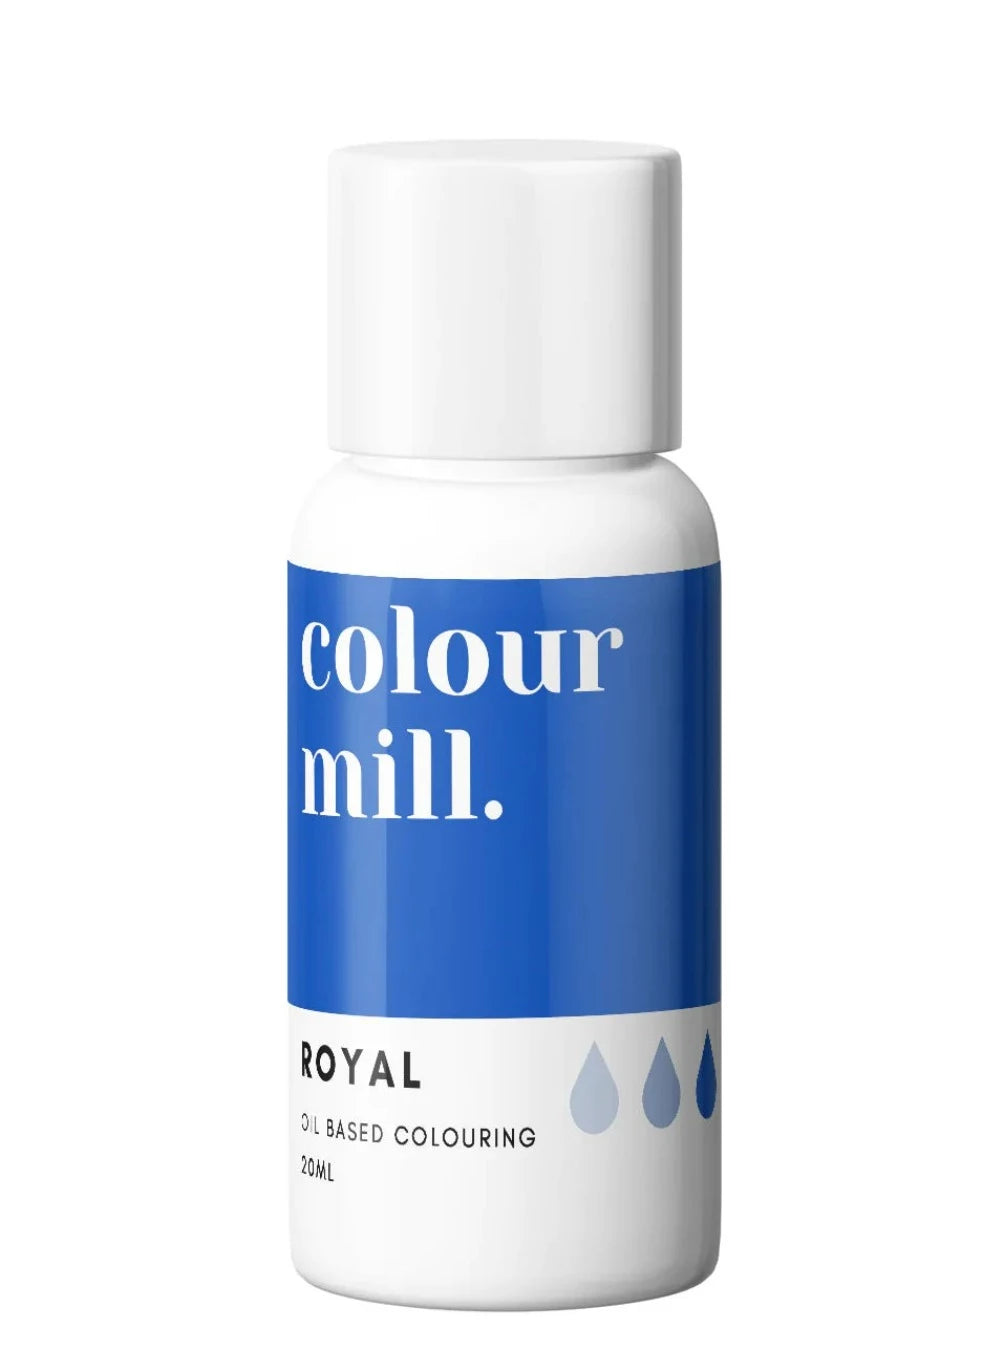 royal colour mill, colour mill oil based, royal colour mill oil based, oil based colouring, colour mill royal  